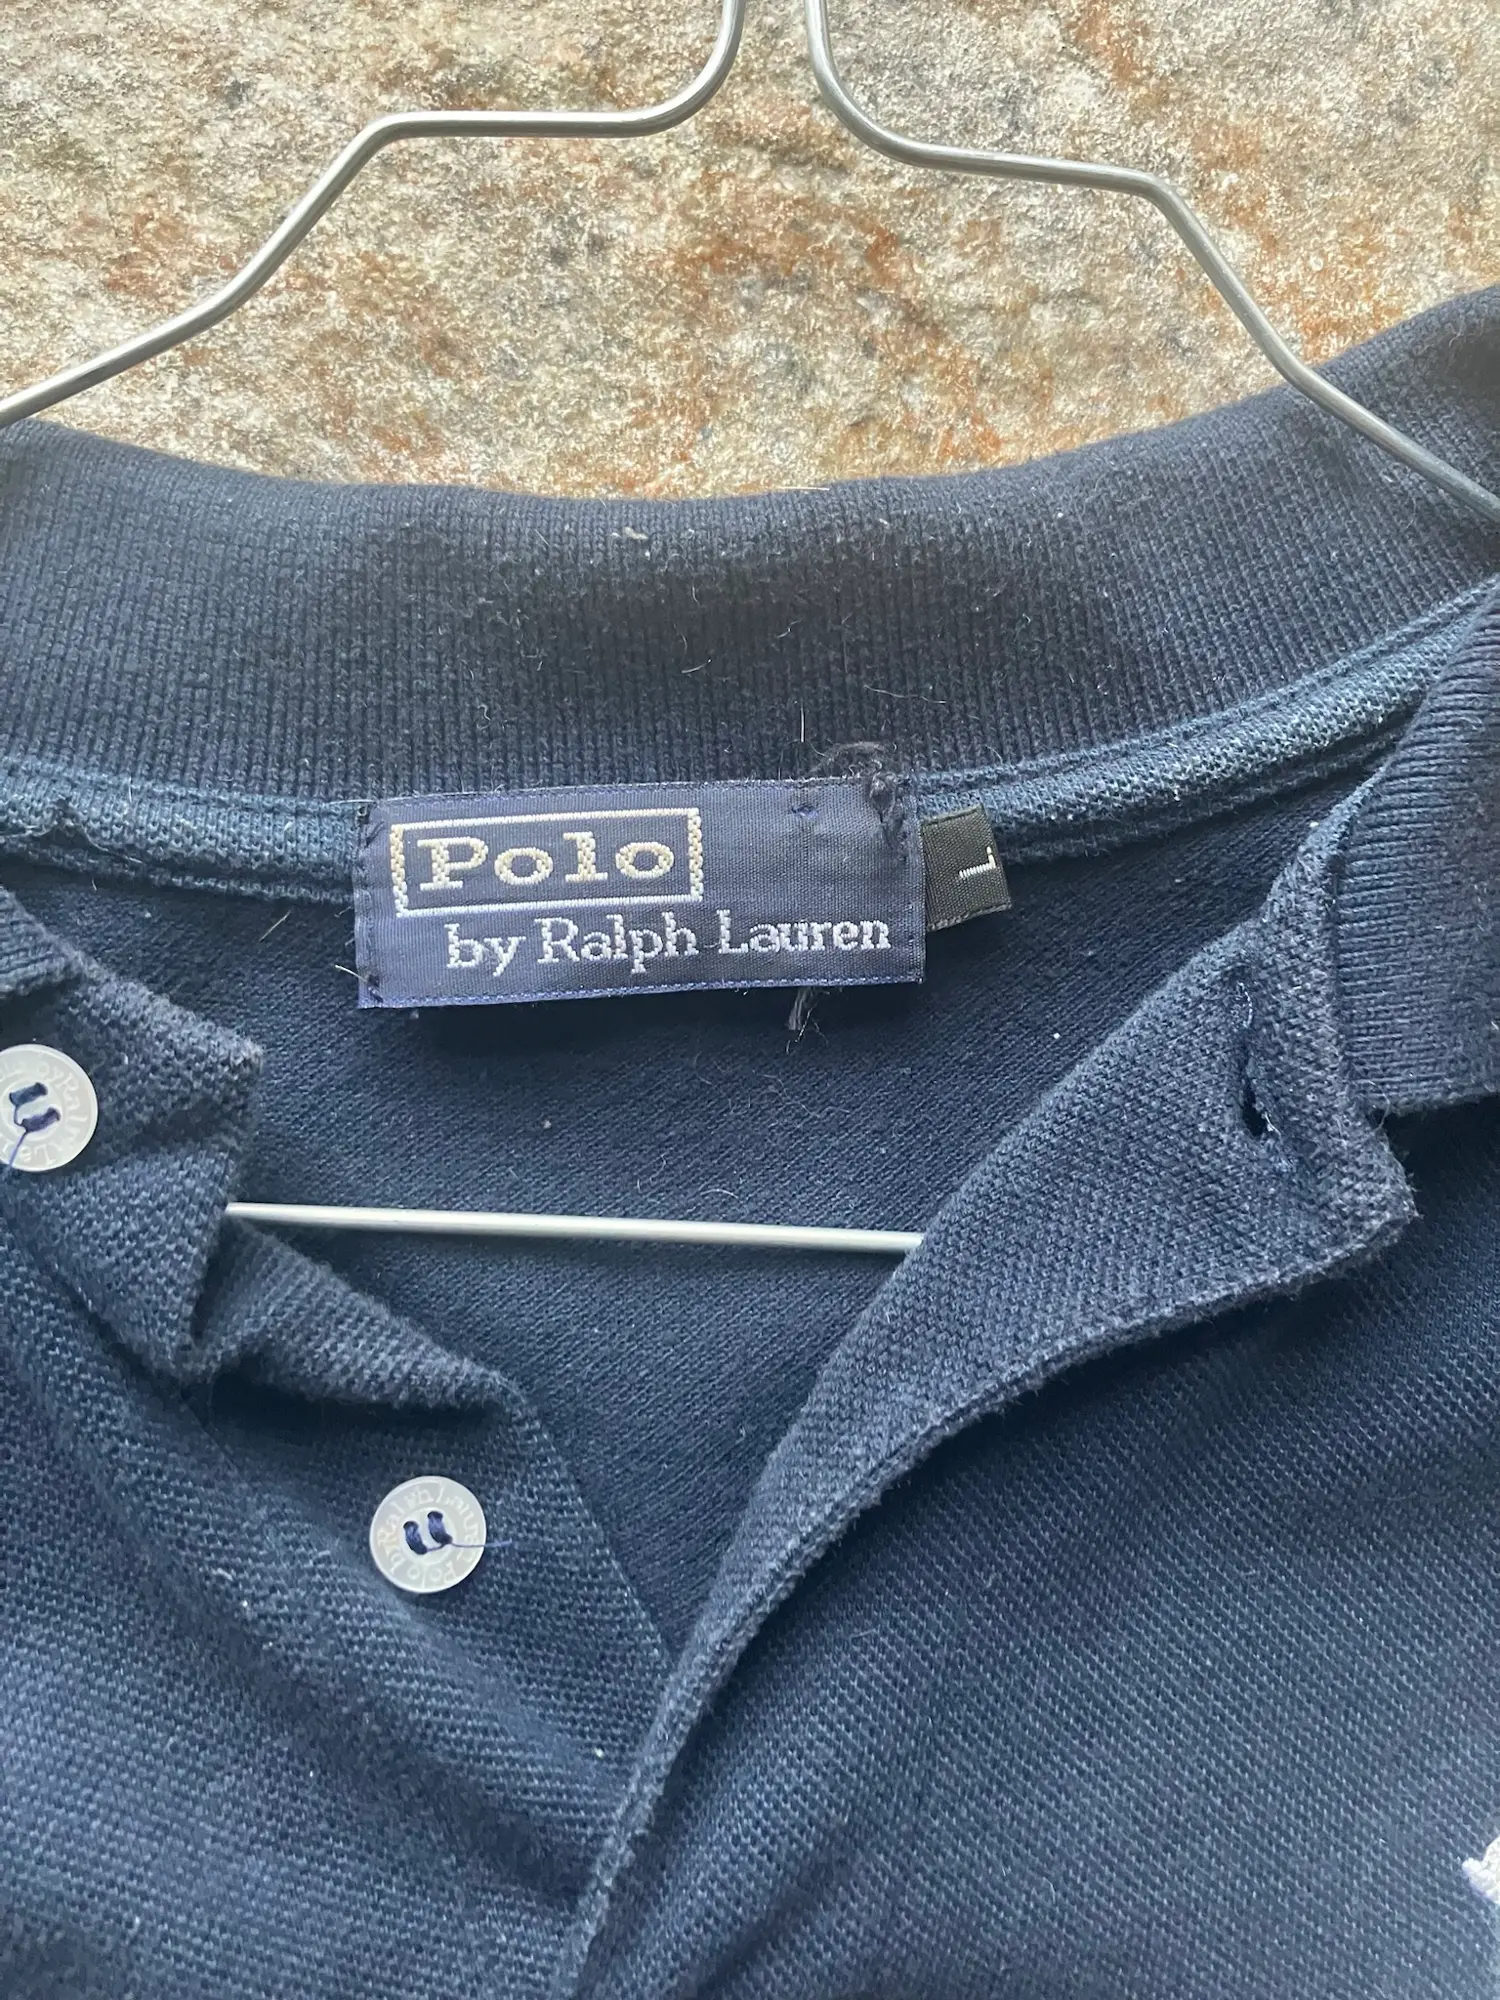 Polo Ralph Lauren polotrøje